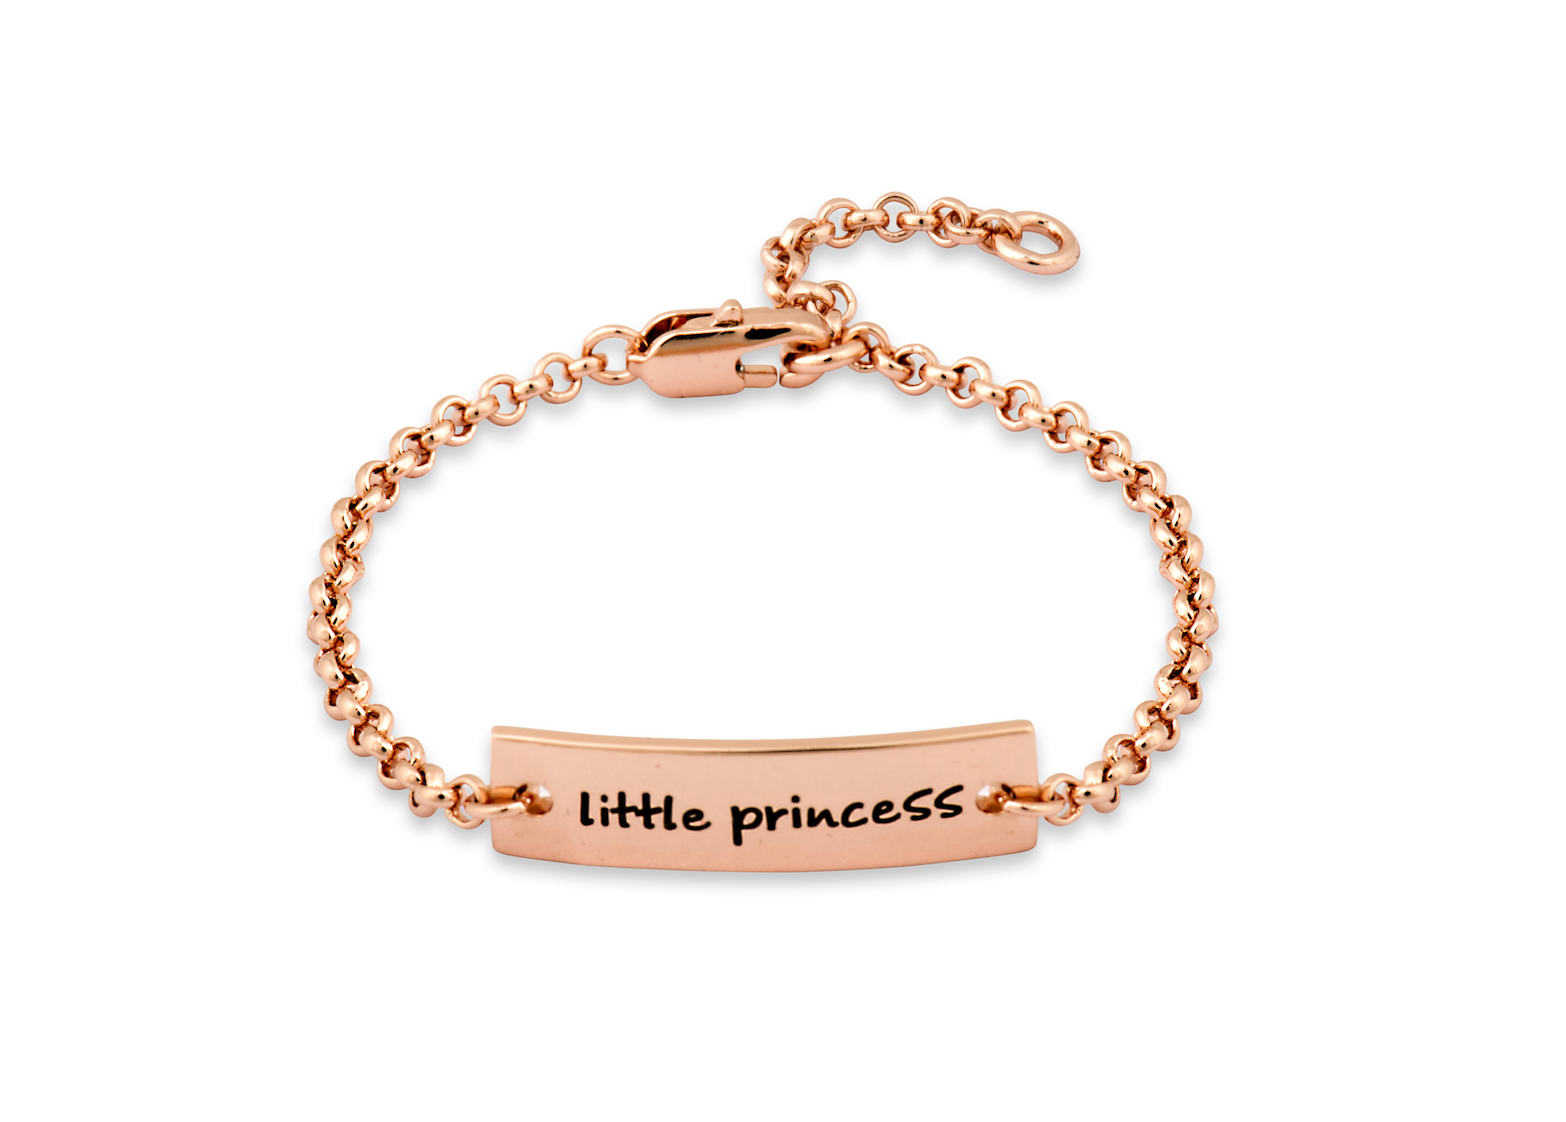 Disney Princess Stretchy Bracelets | Bead Tutorial - YouTube